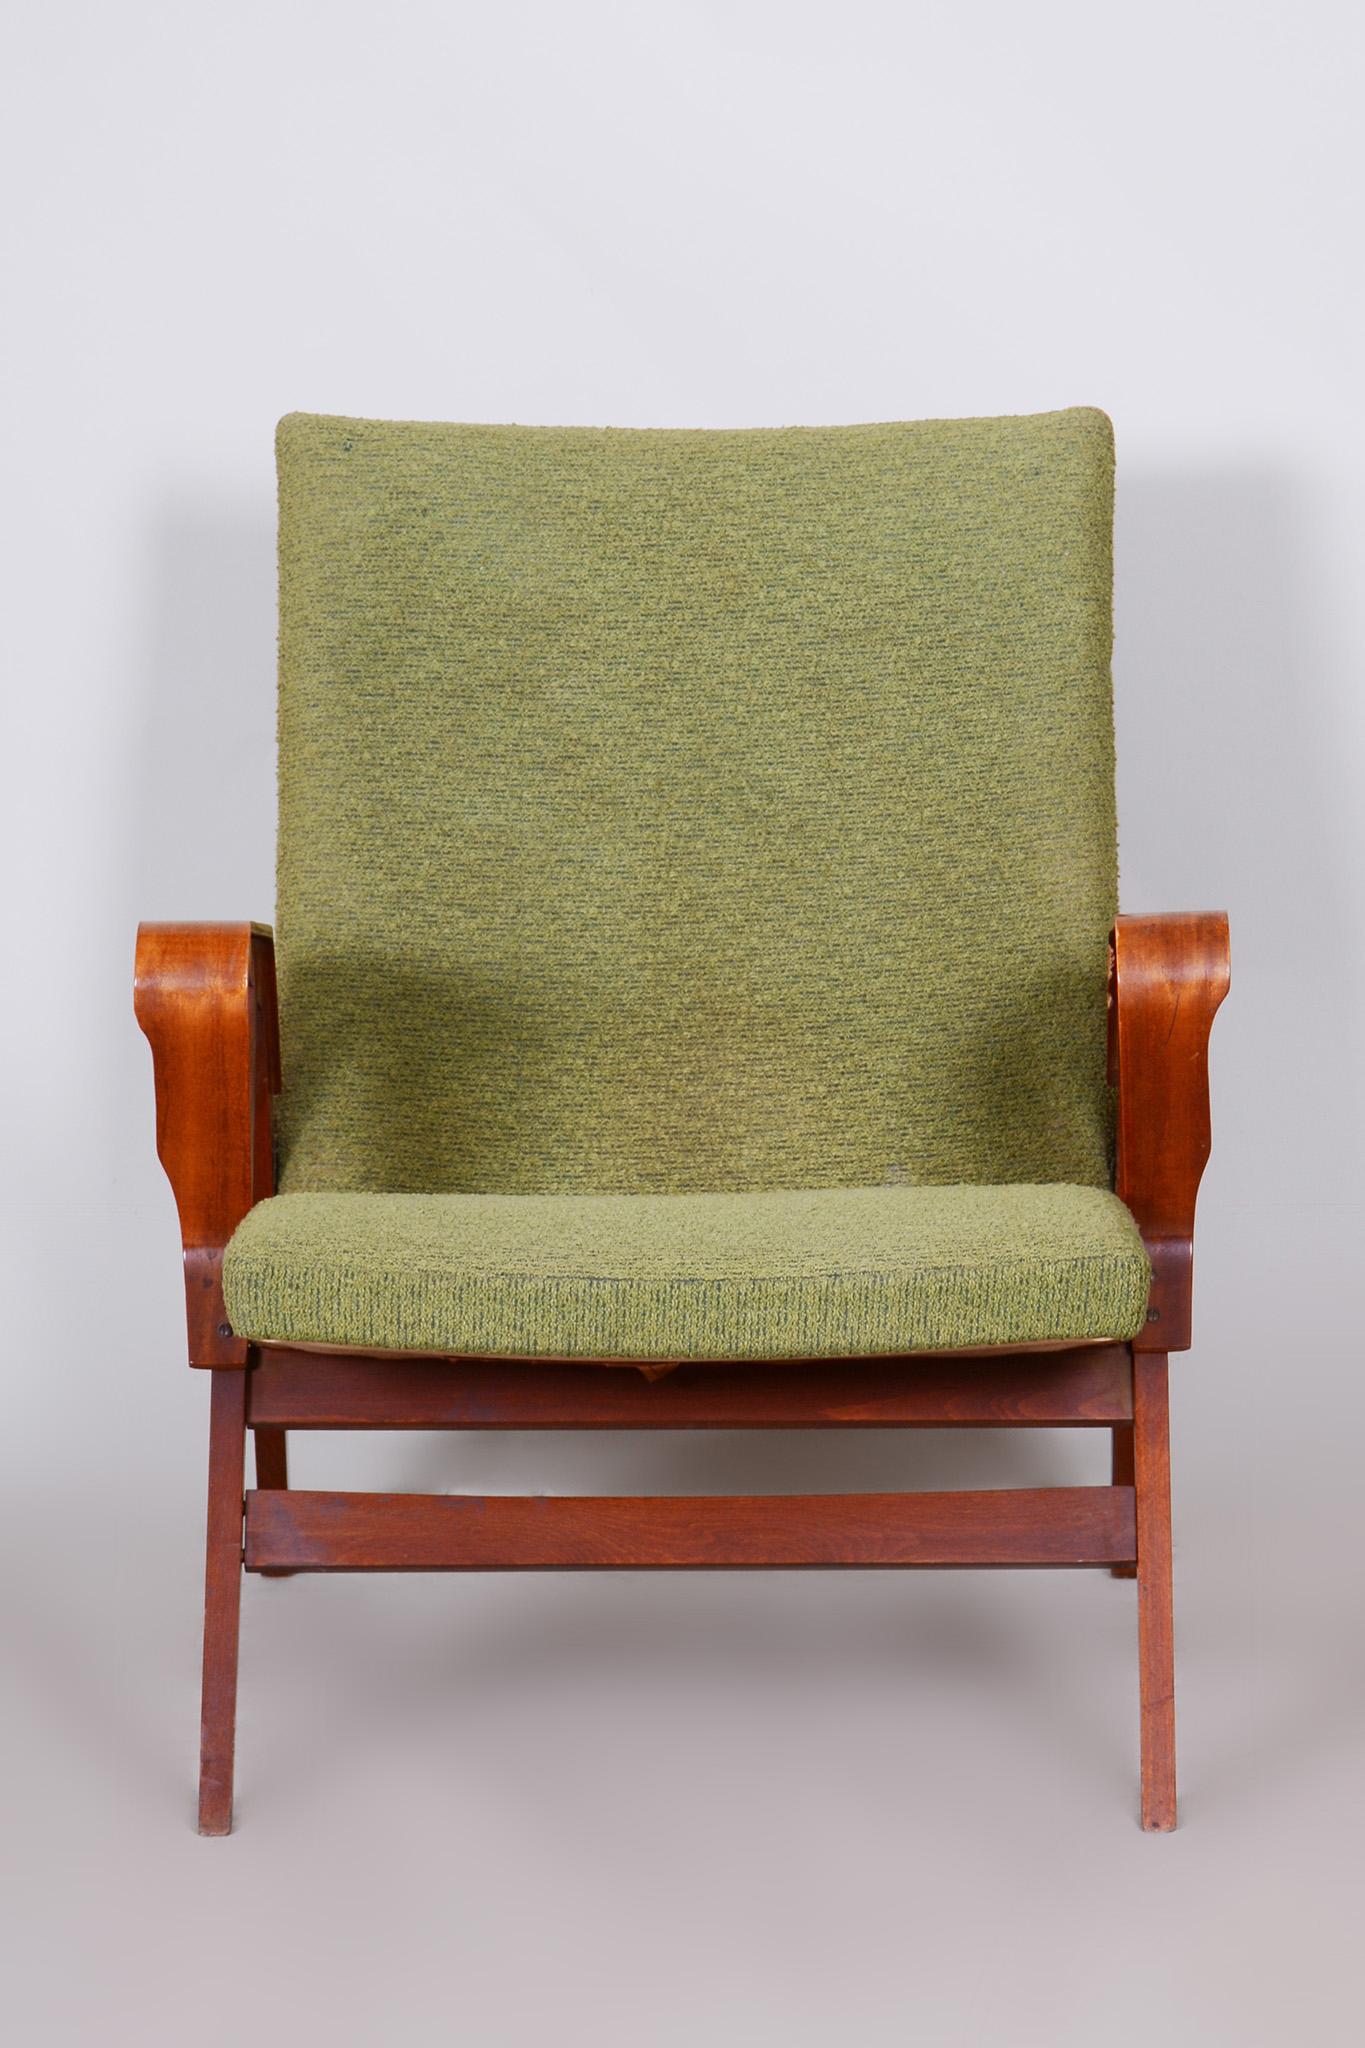 Original midcentury green beech armchair.

Maker: Tatra - Pravenec
Source: Czechia (Czechoslovakia)
Period: 1950-1959
Material: Beech, fabric

Well-preserved condition.